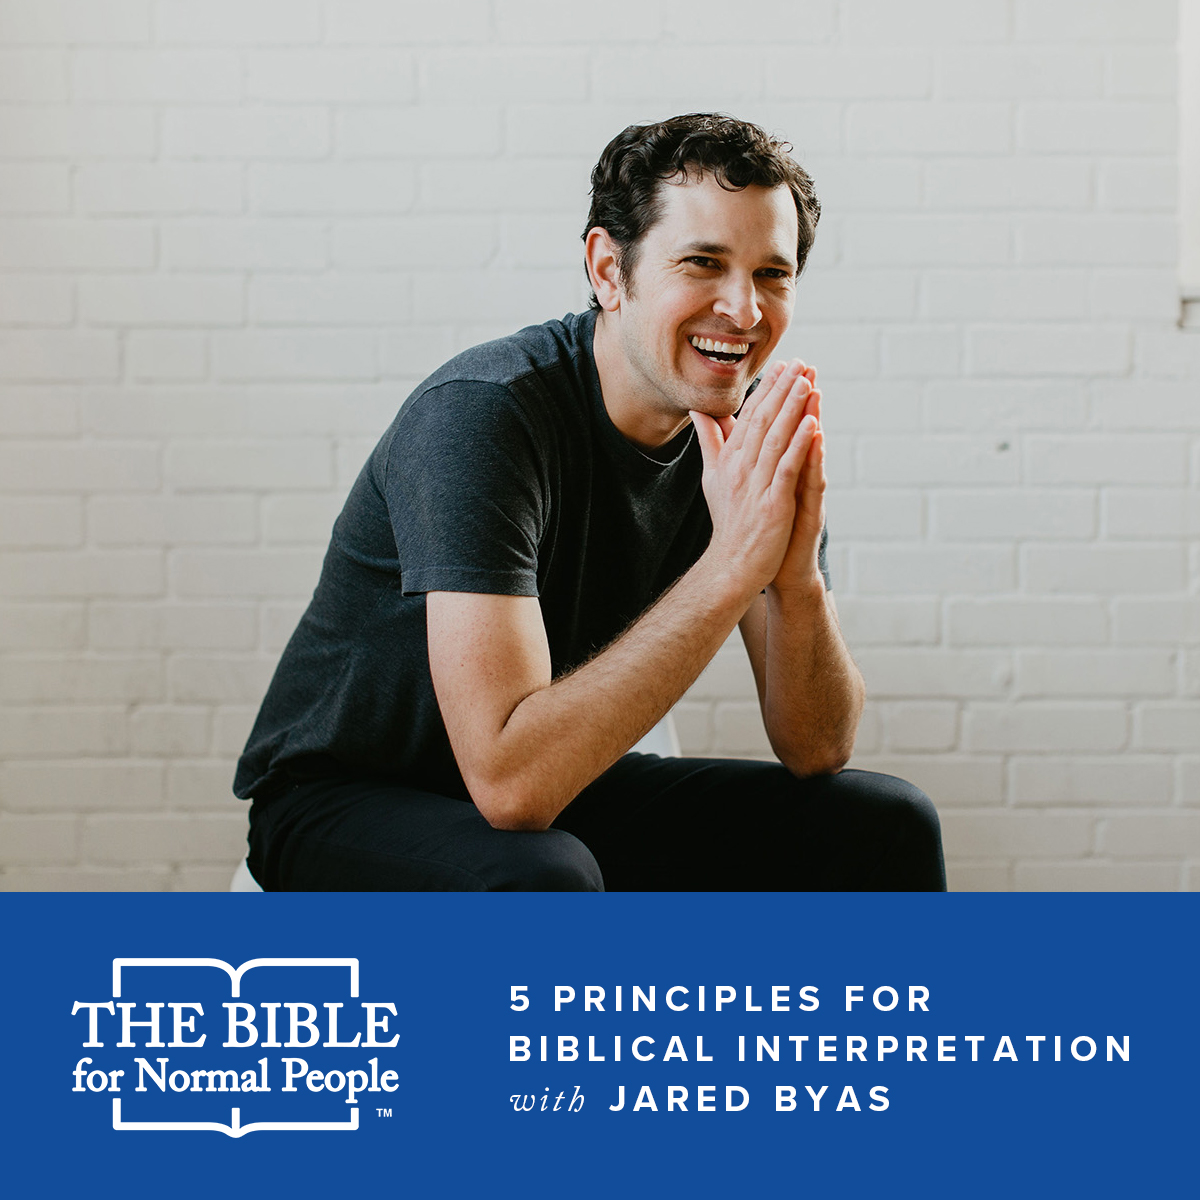 5 Principles for Biblical Interpretation with Jared Byas